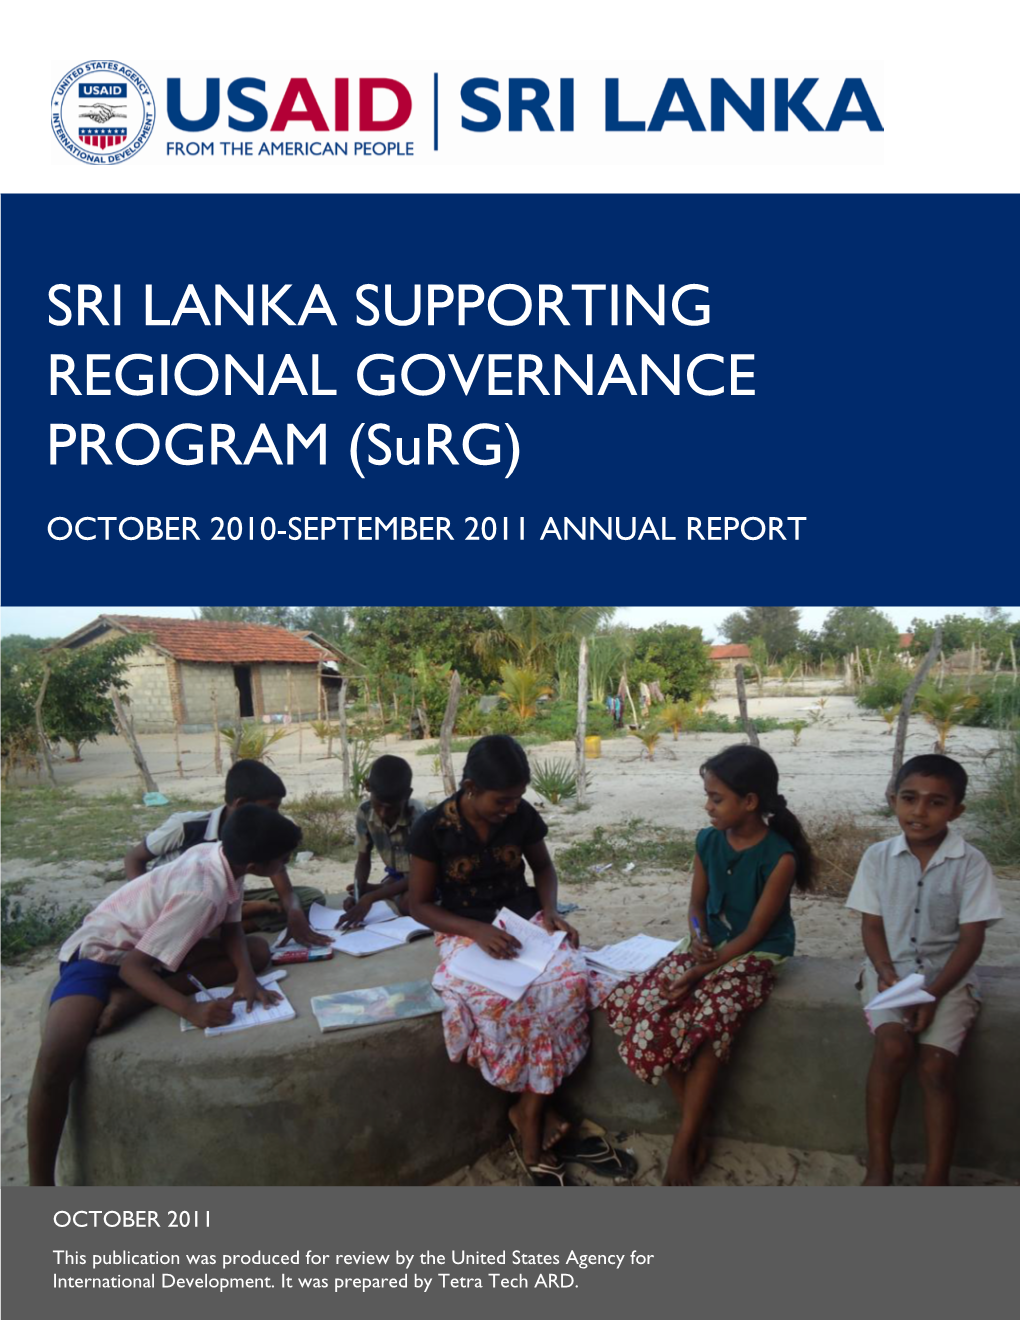 SRI LANKA SUPPORTING REGIONAL GOVERNANCE PROGRAM (Surg)